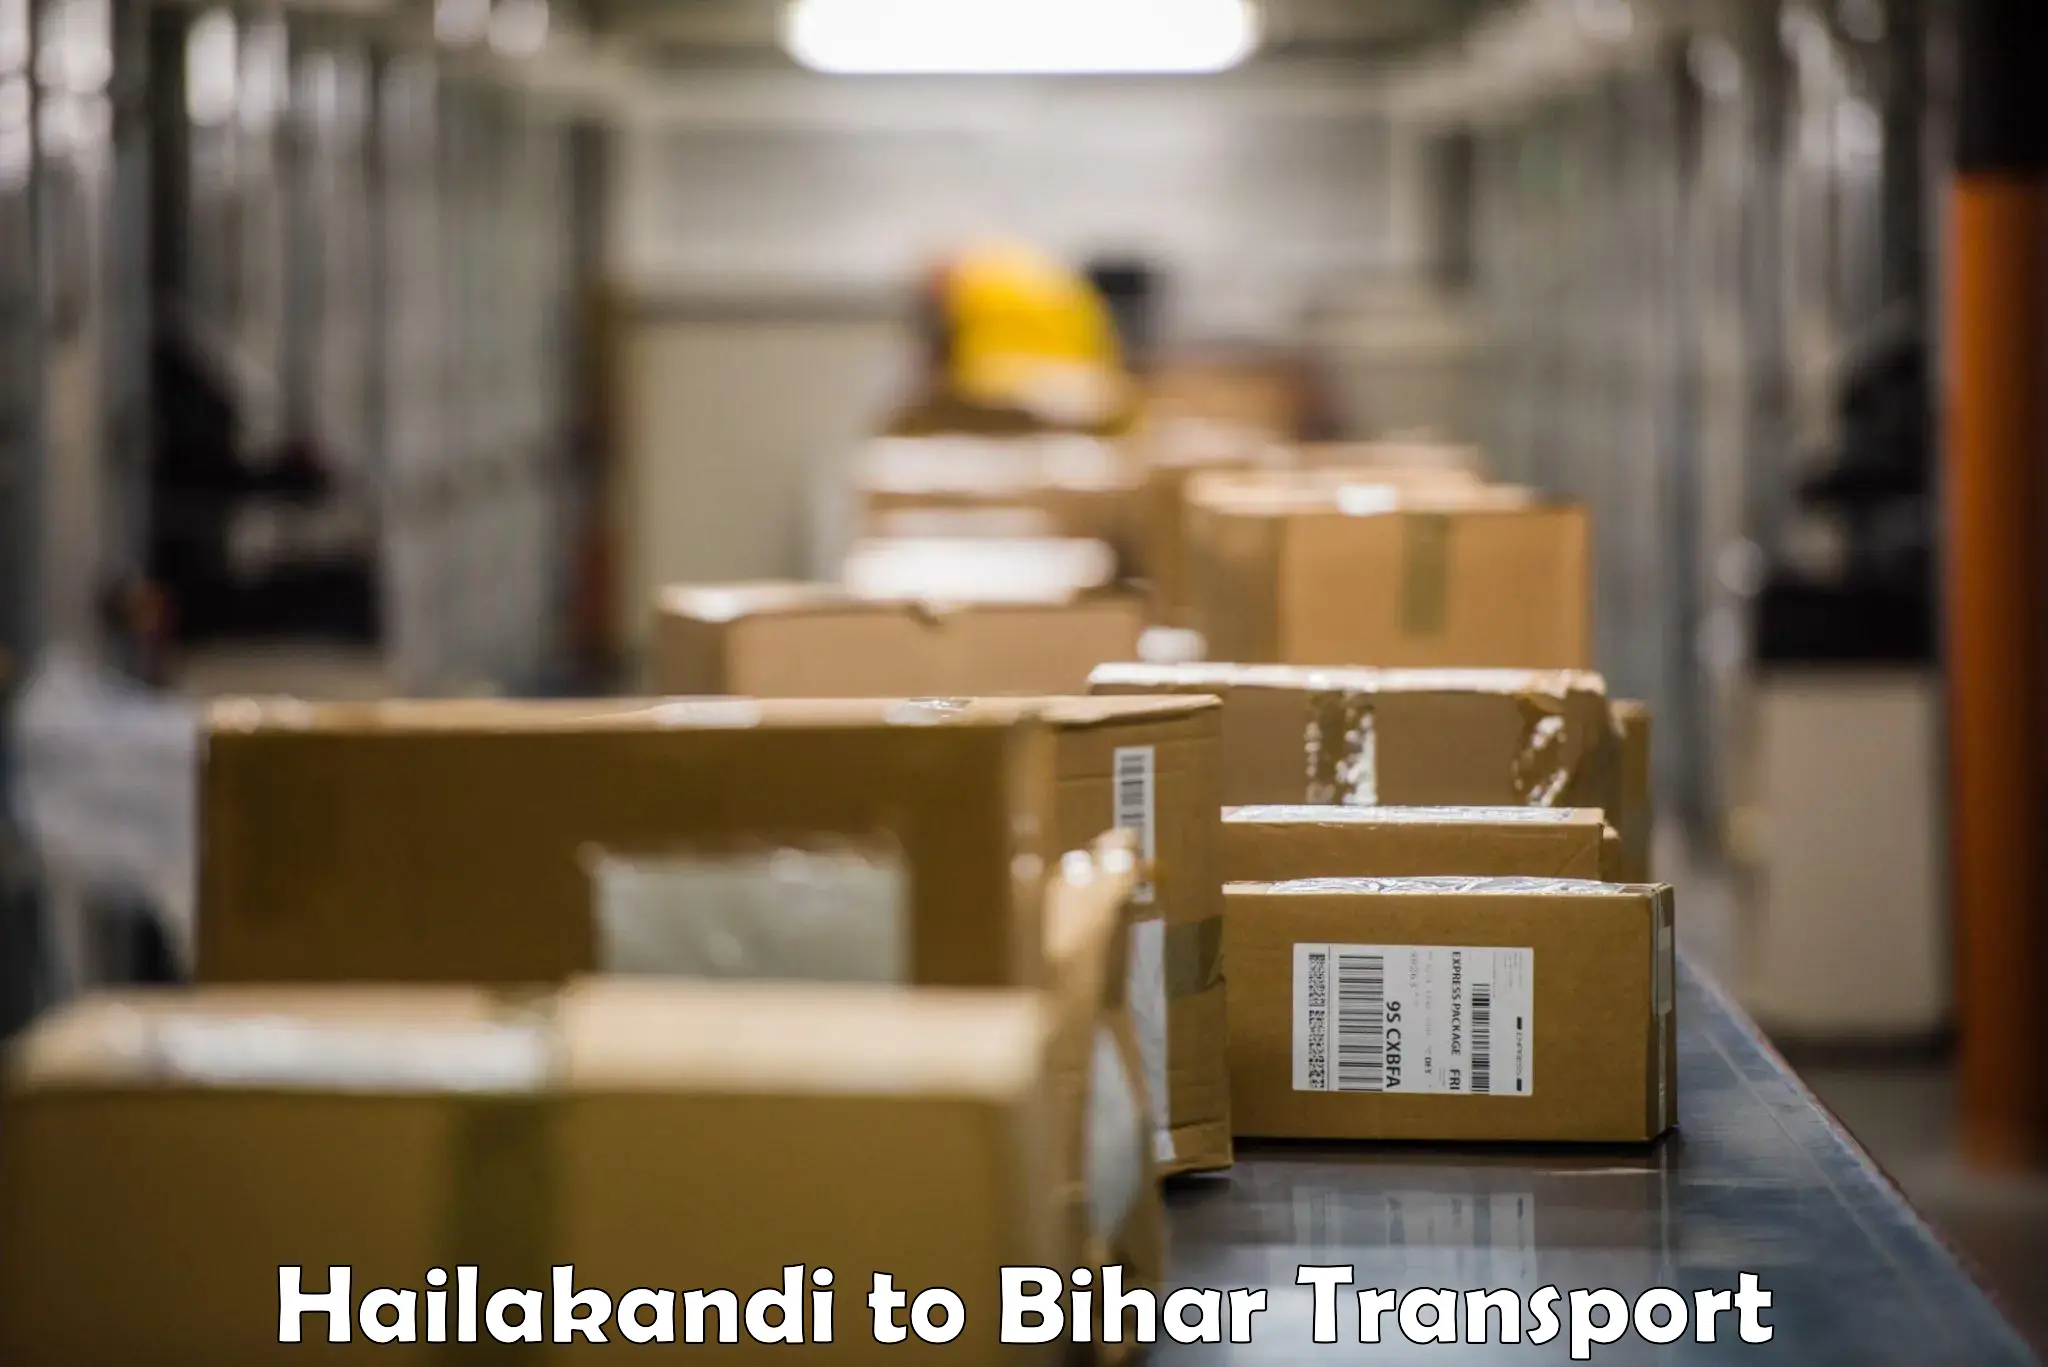 Container transport service Hailakandi to Bankipore